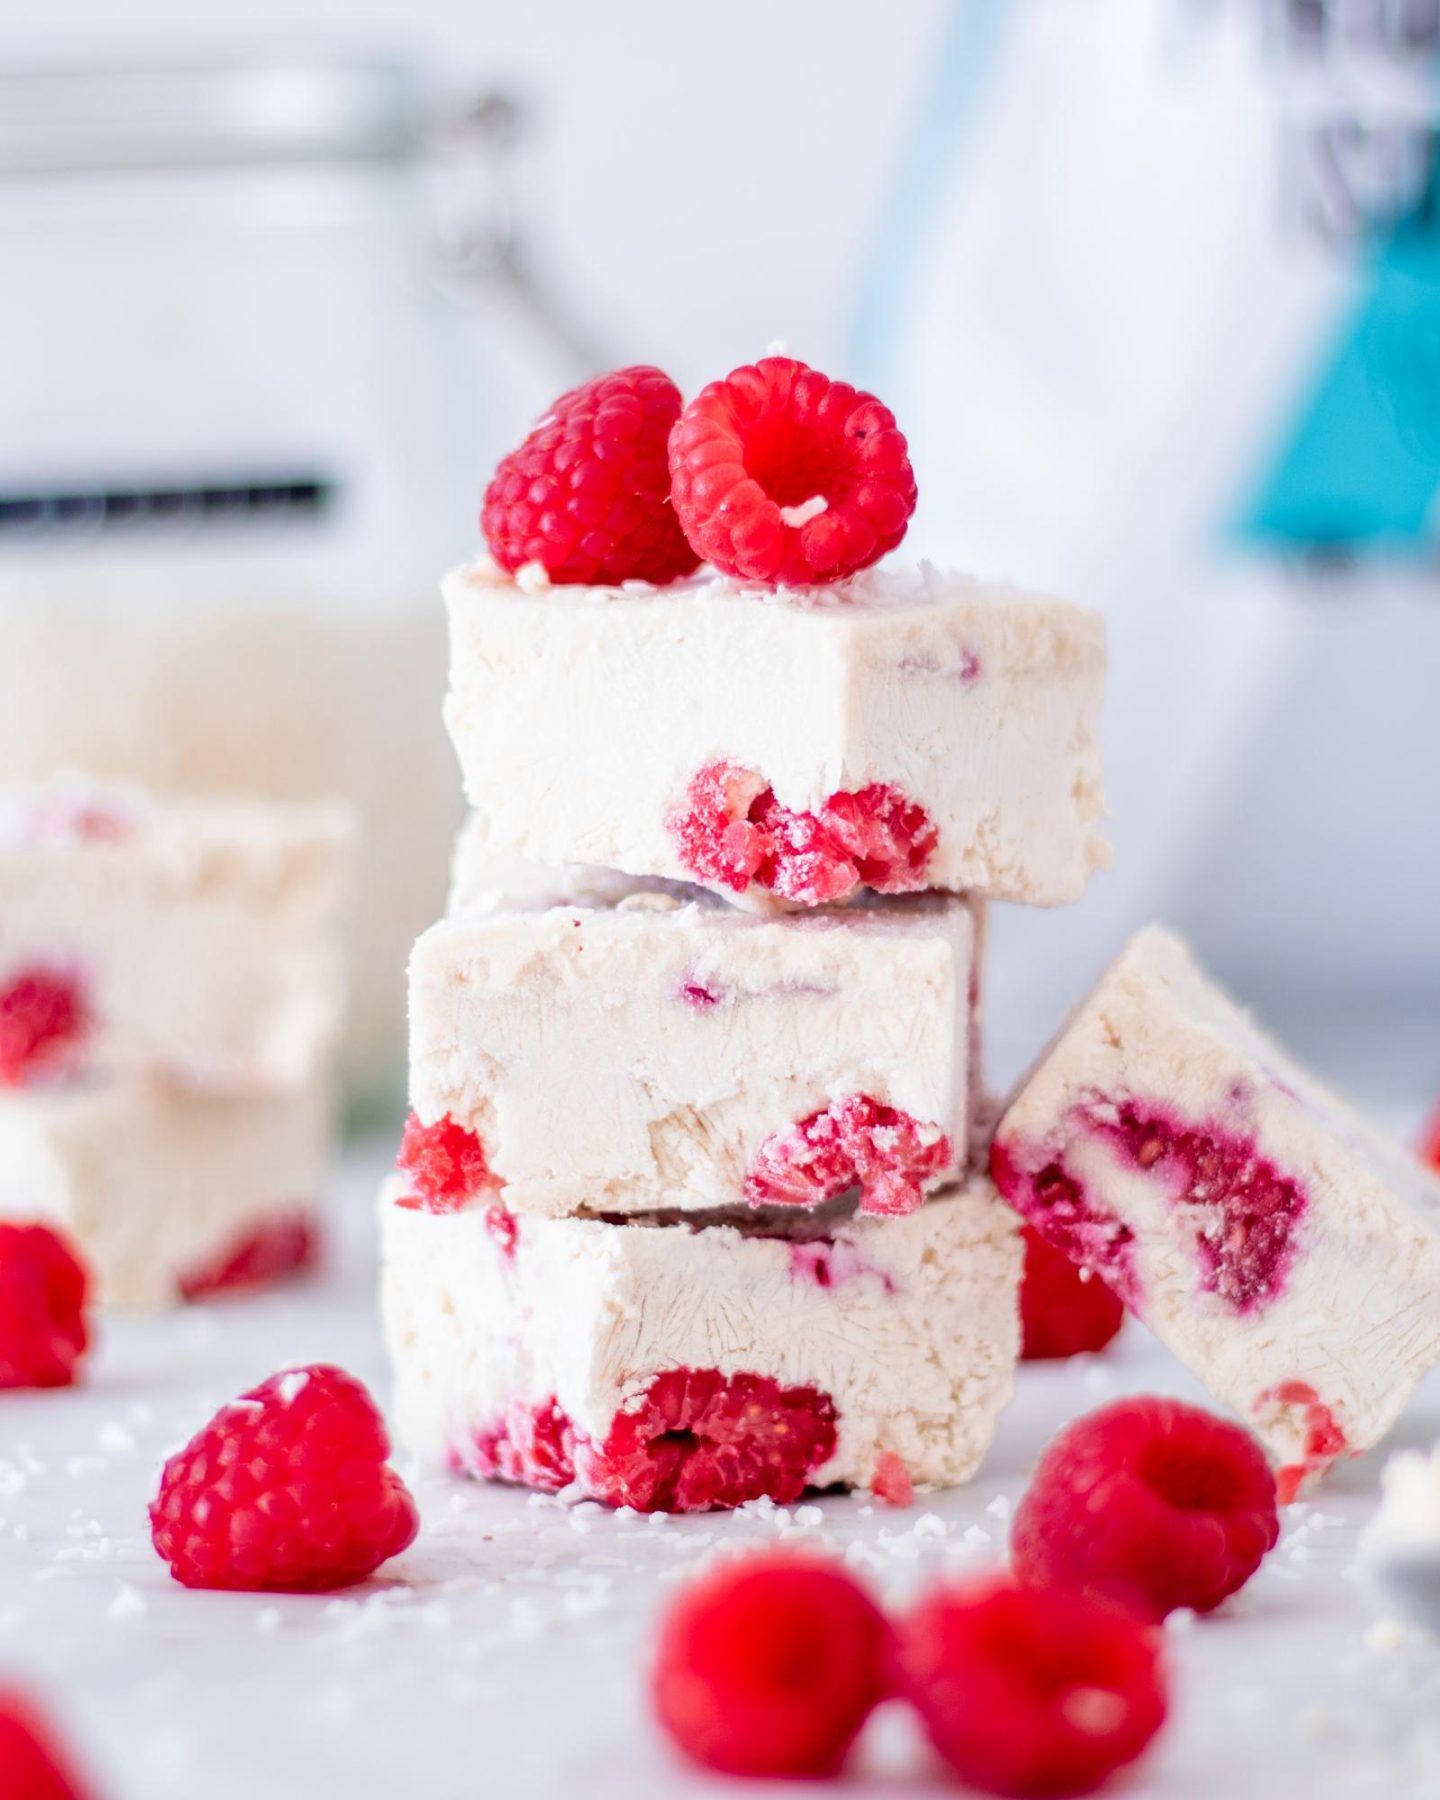 A stack of Vegan Protein Frozen Yogurt Bars with raspberries